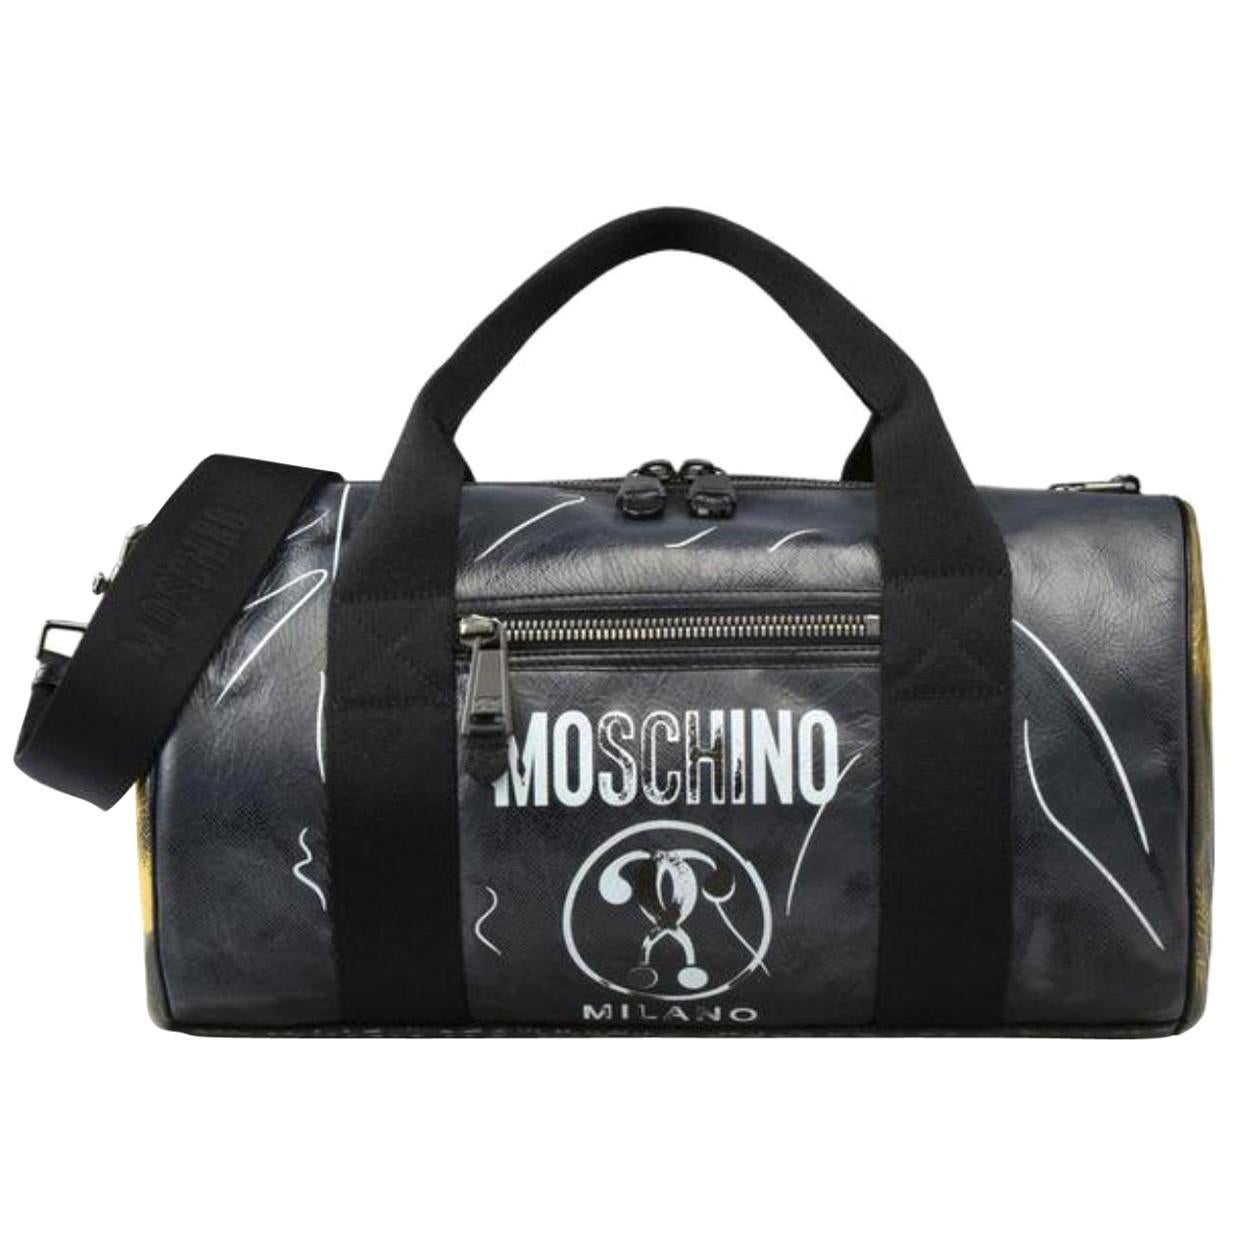 Moschino Duffle Boston 2way 21mr0613 Lead Calfskin Weekend/Travel Bag For Sale